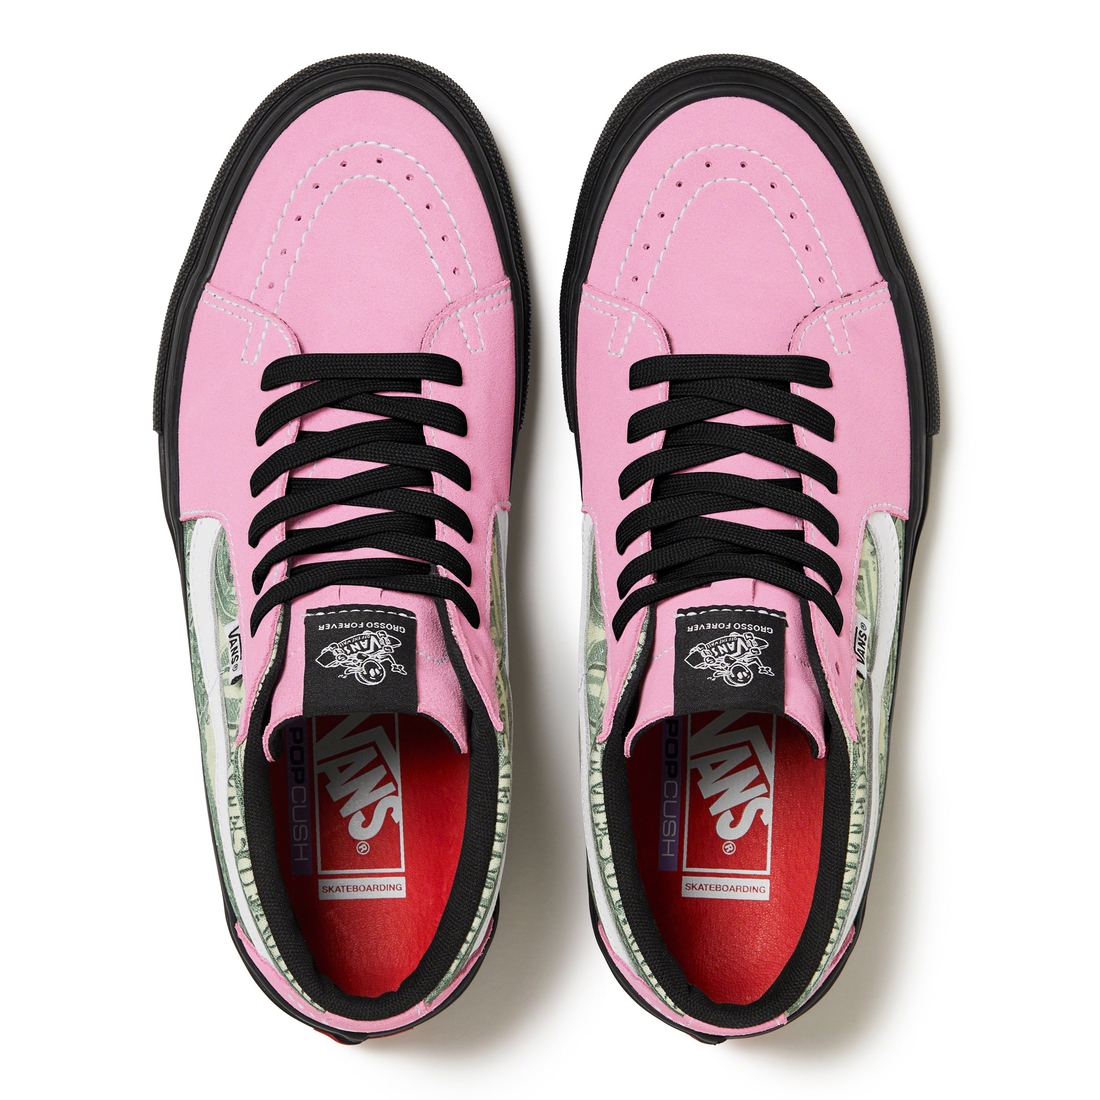 Details on Supreme  Vans Dollar Skate Grosso Mid Pink from spring summer
                                                    2023 (Price is $110)